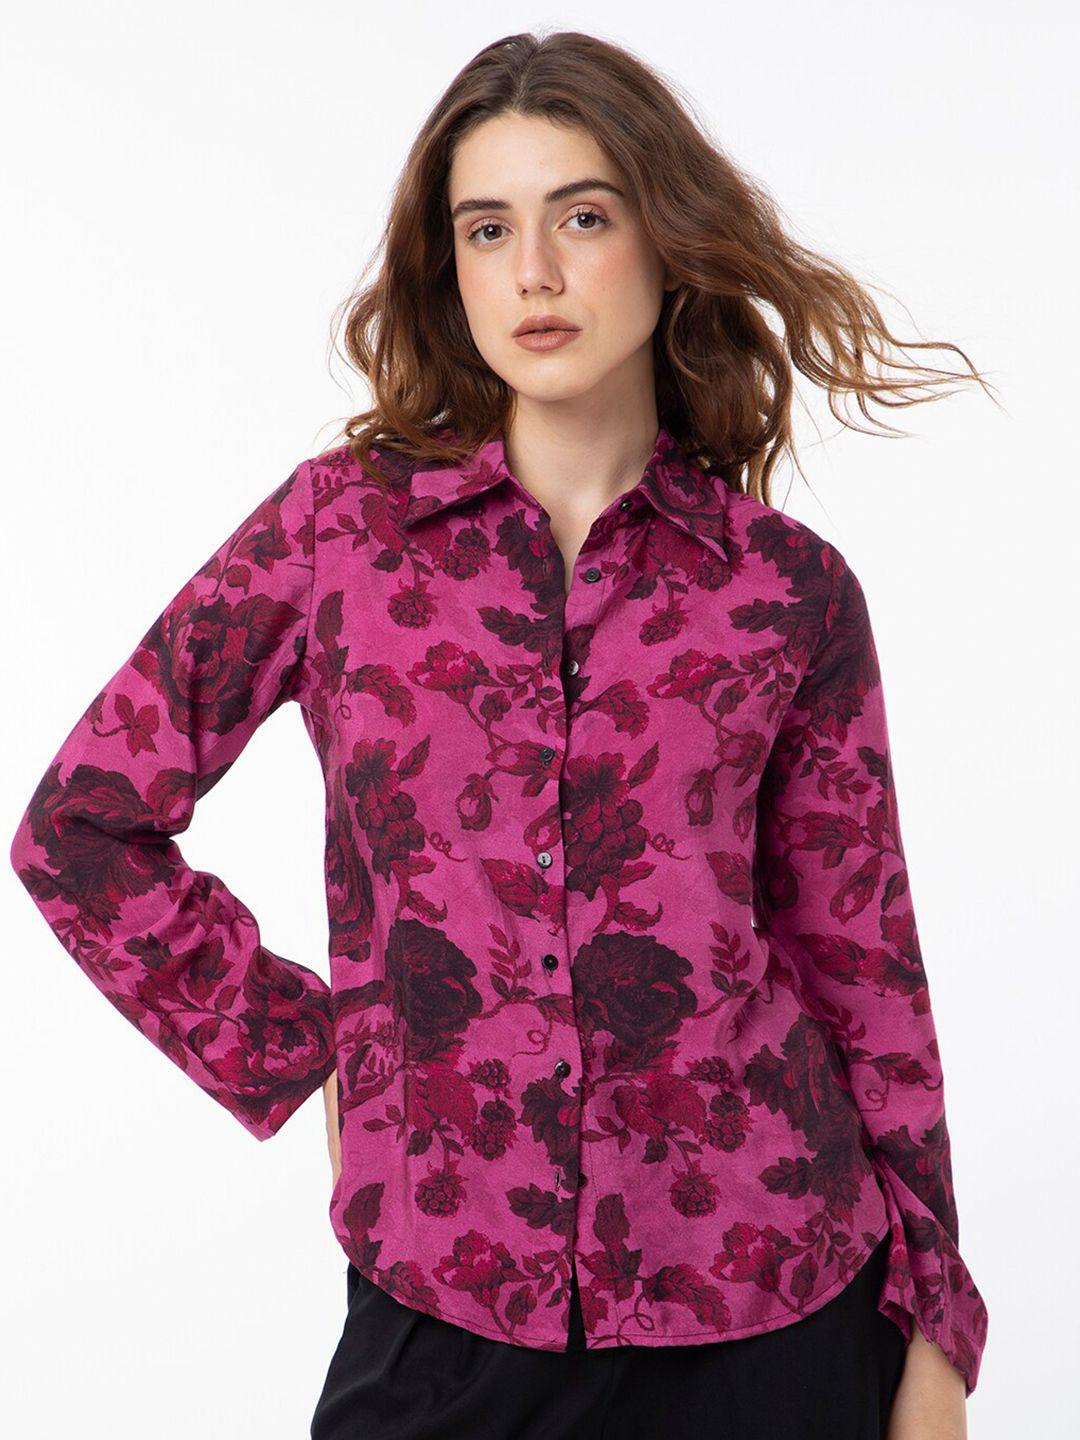 rareism floral printed shirt style top